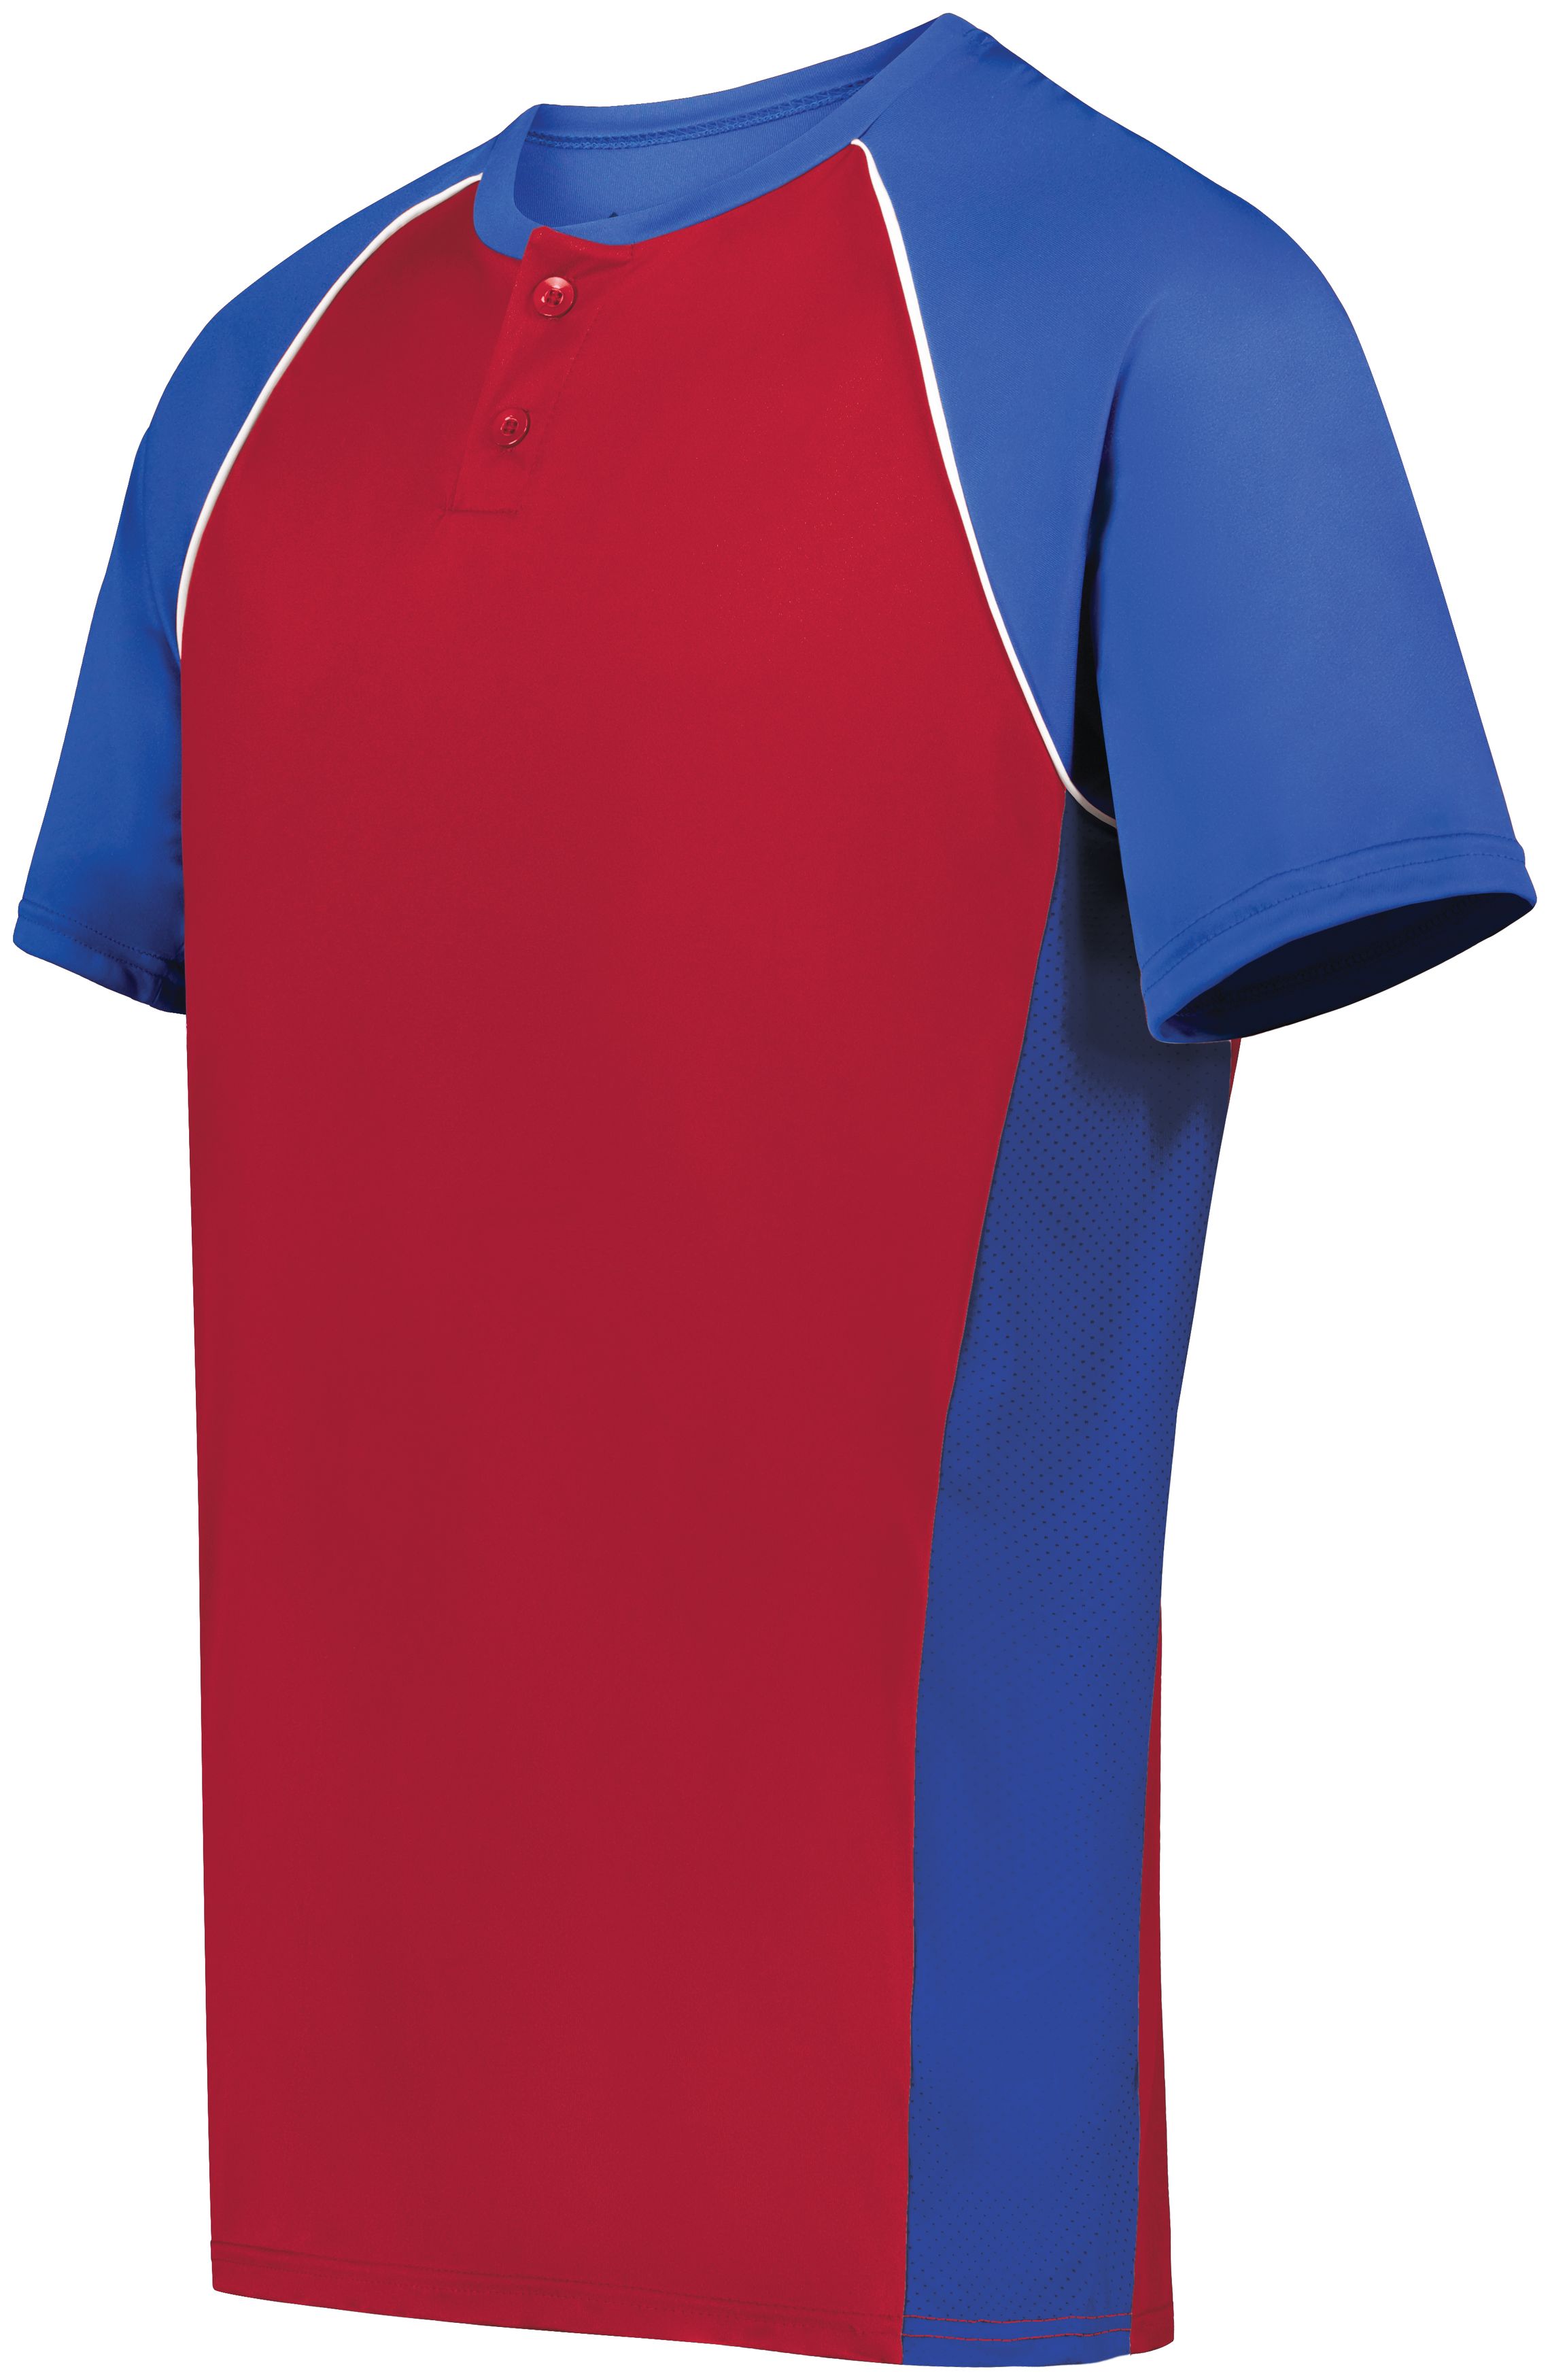 Augusta Sportswear 1560 - Limit Jersey $21.49 - T-Shirts